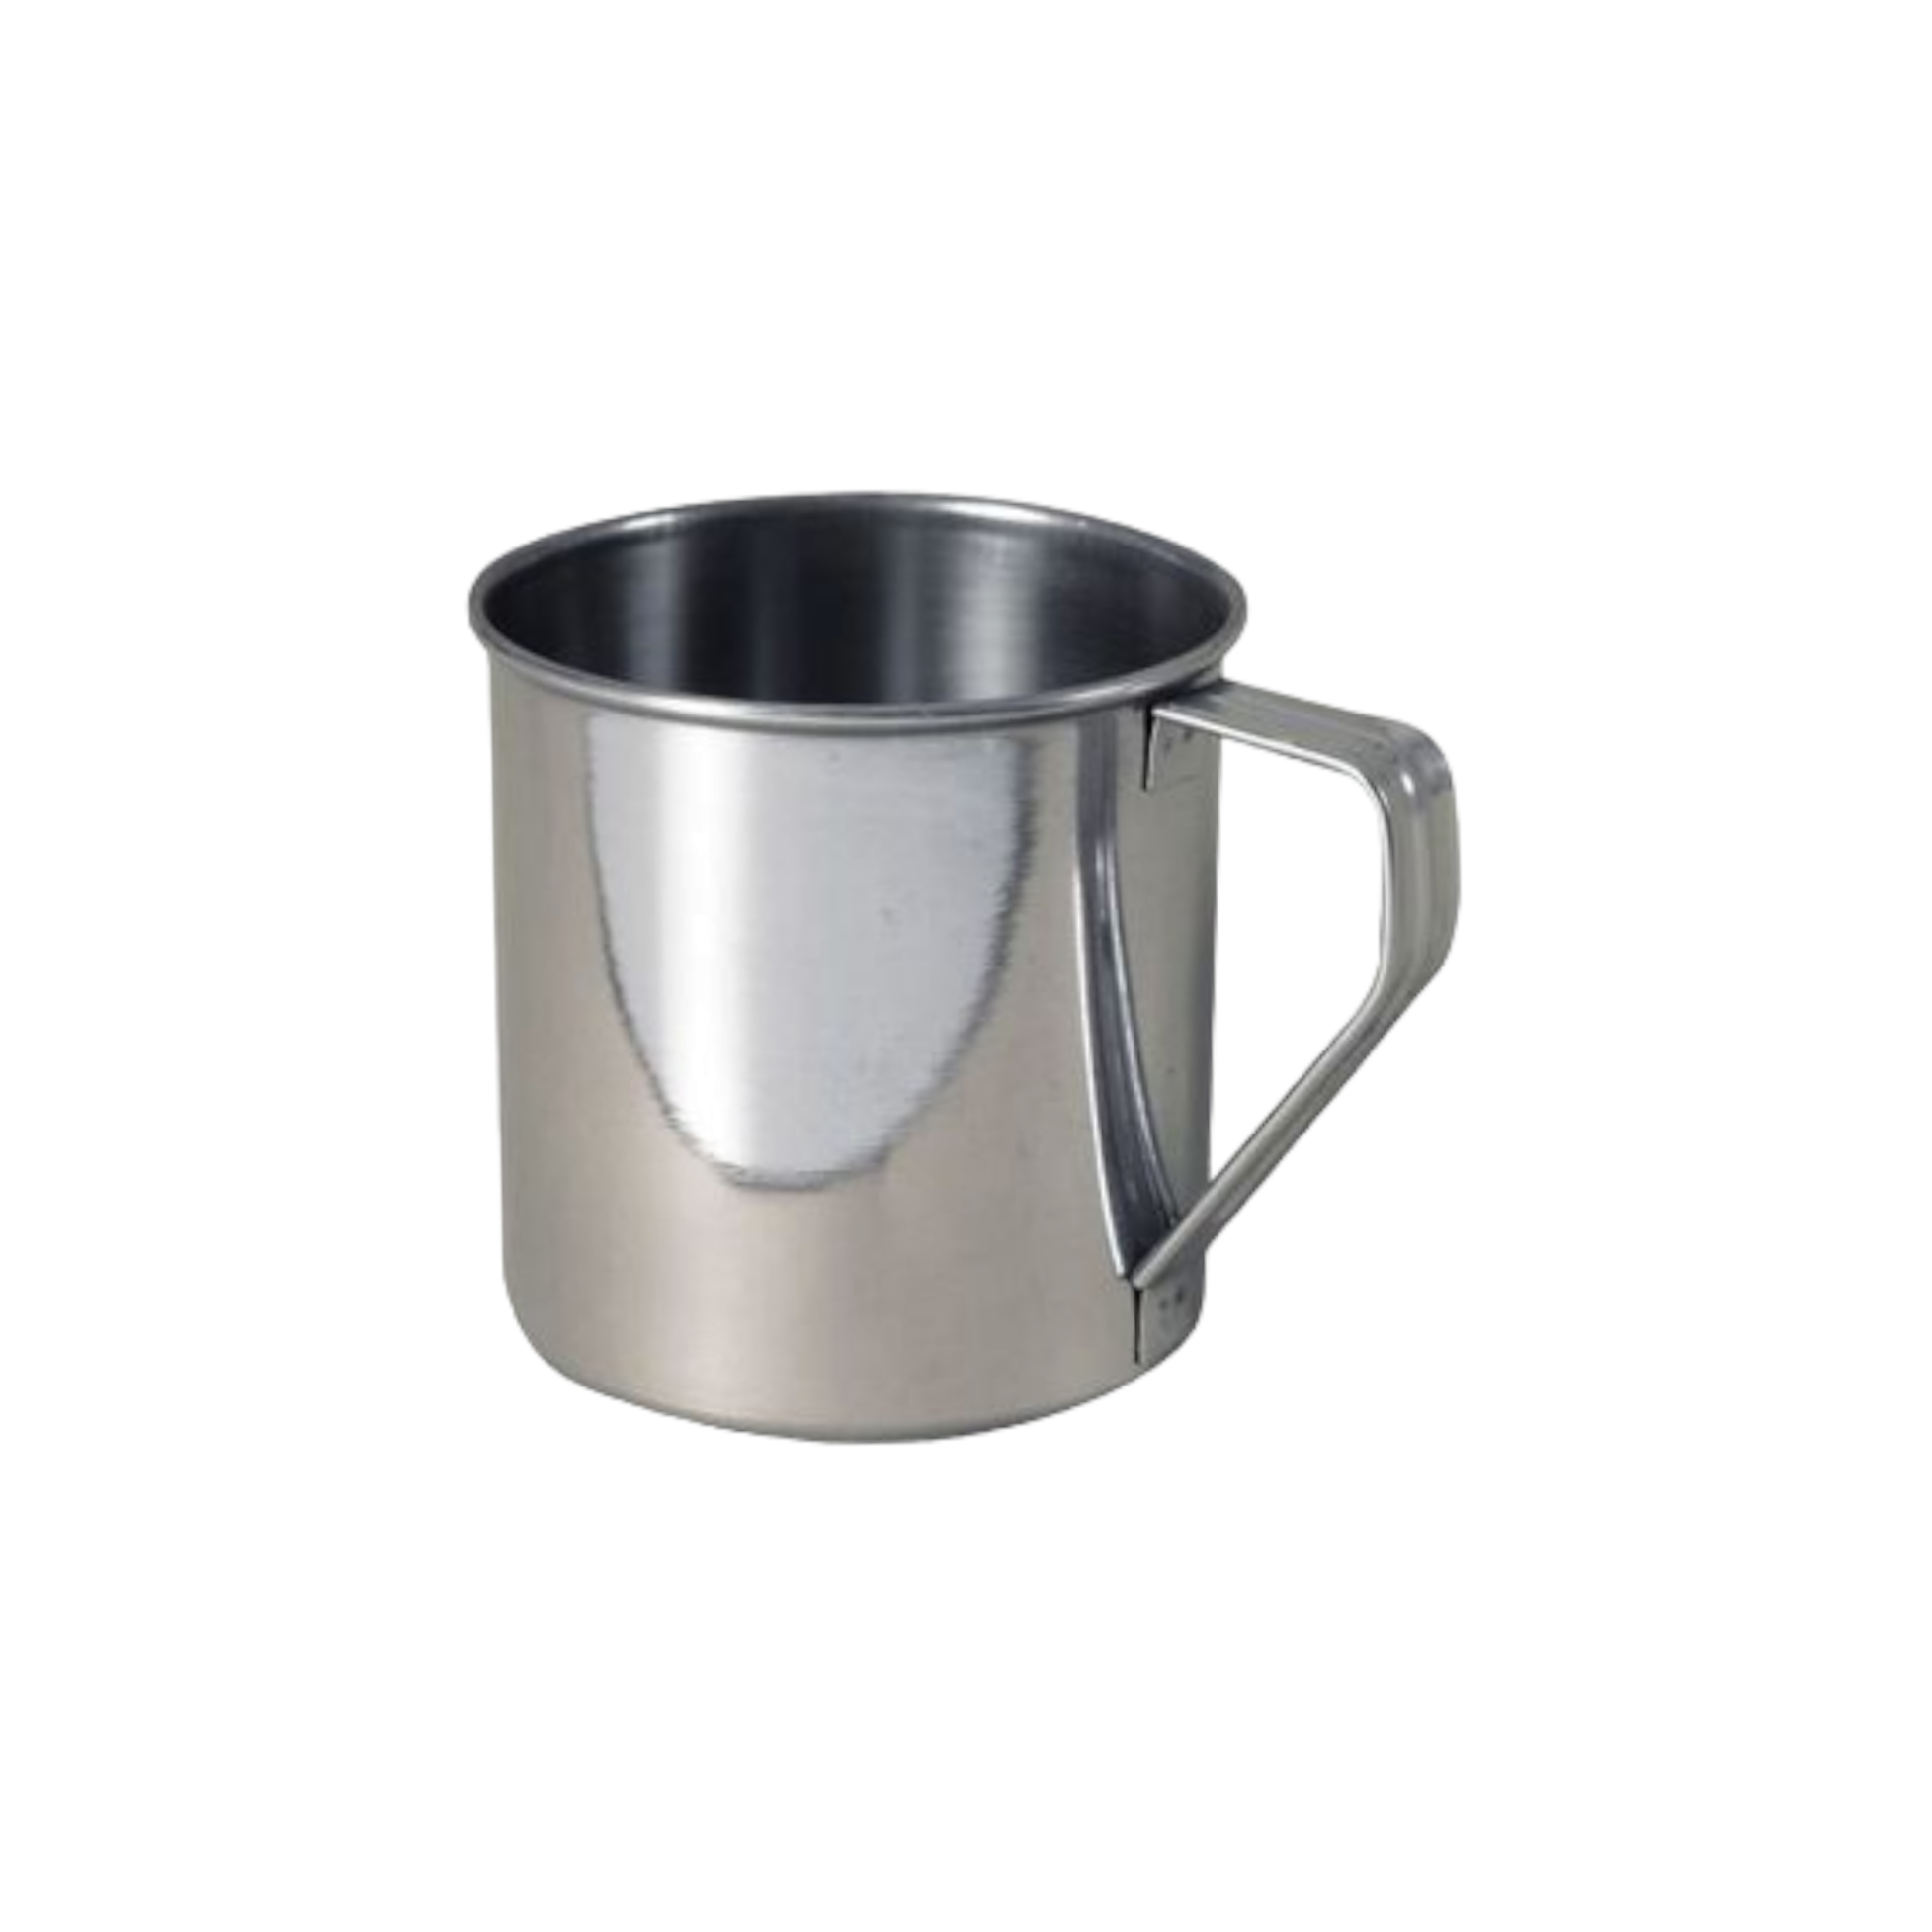 Stainless Steel Mug 440ml 9x8cm Tumbler Cup